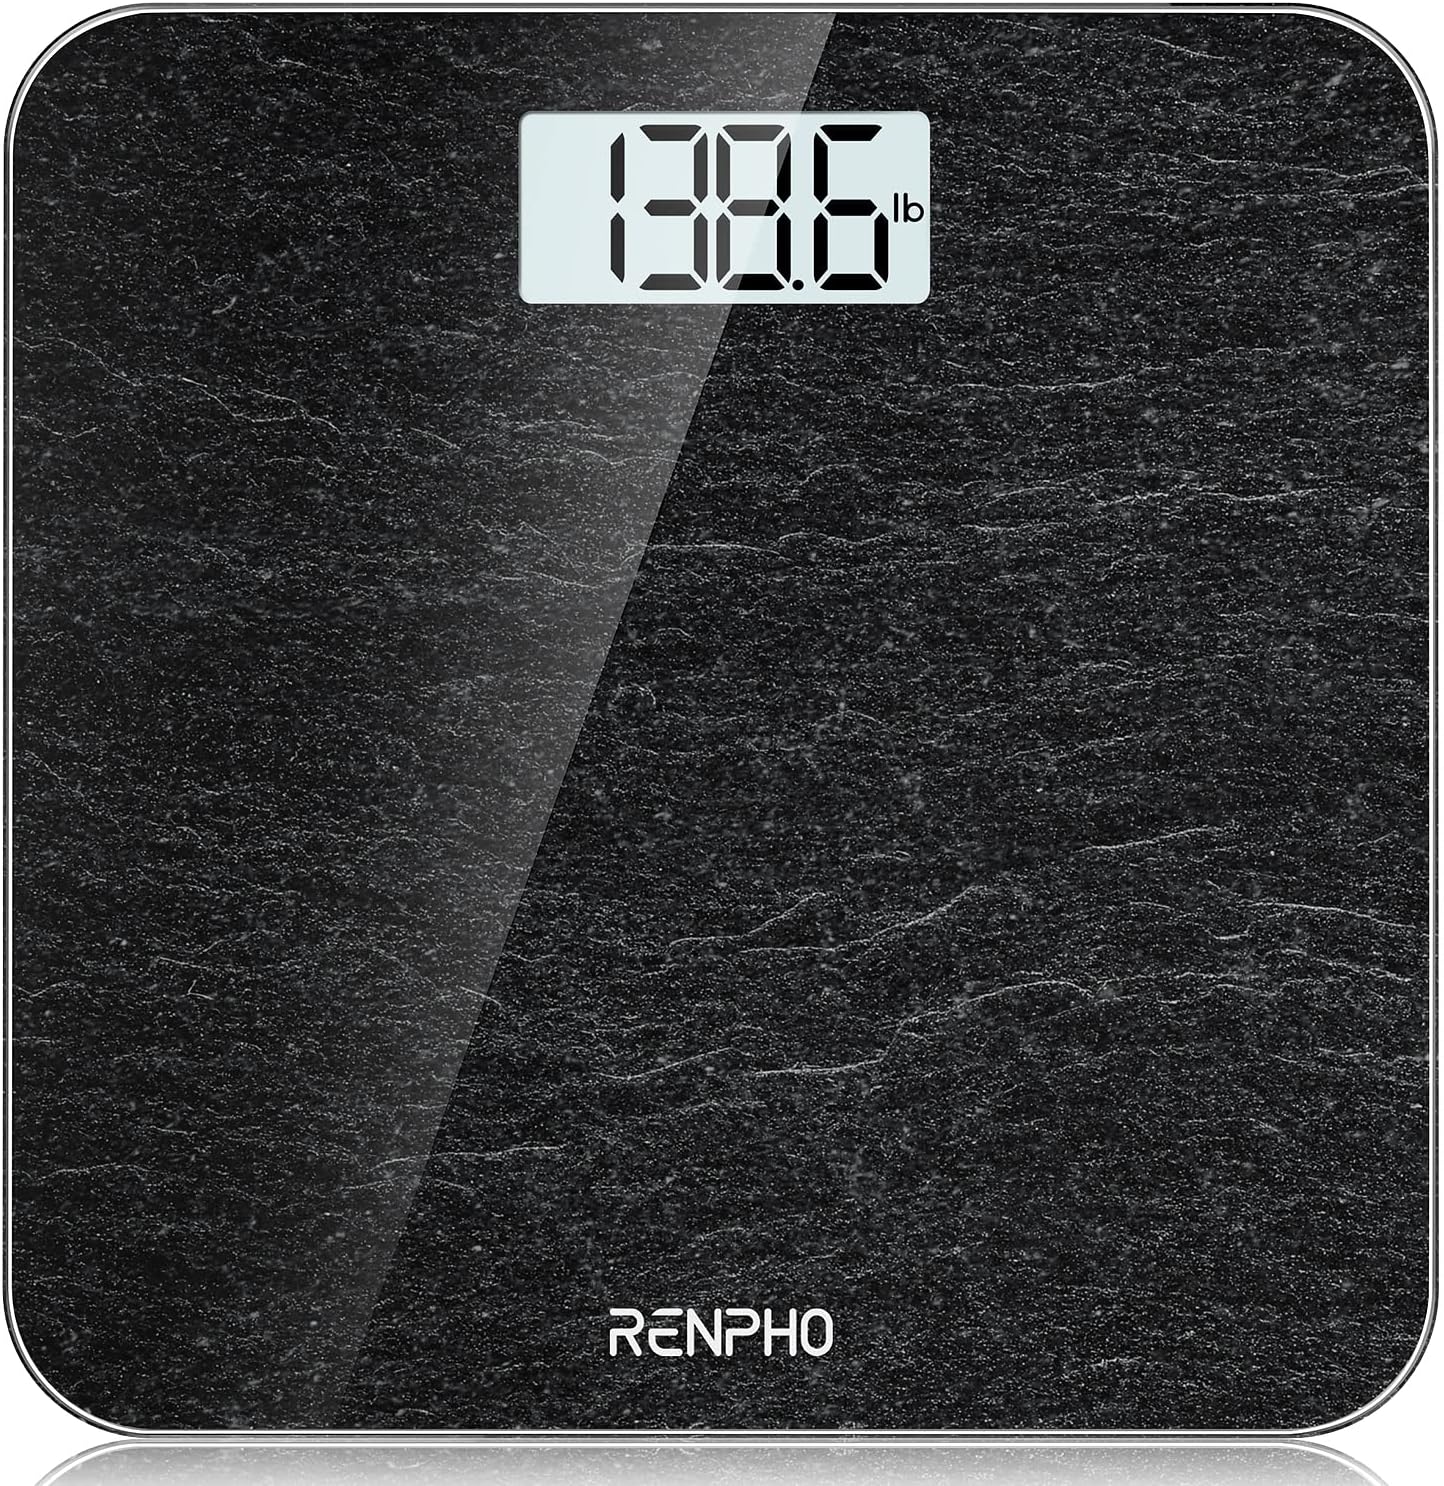 Synopsis: RENPHO Digital Bathroom Scale, Black-Core 1S